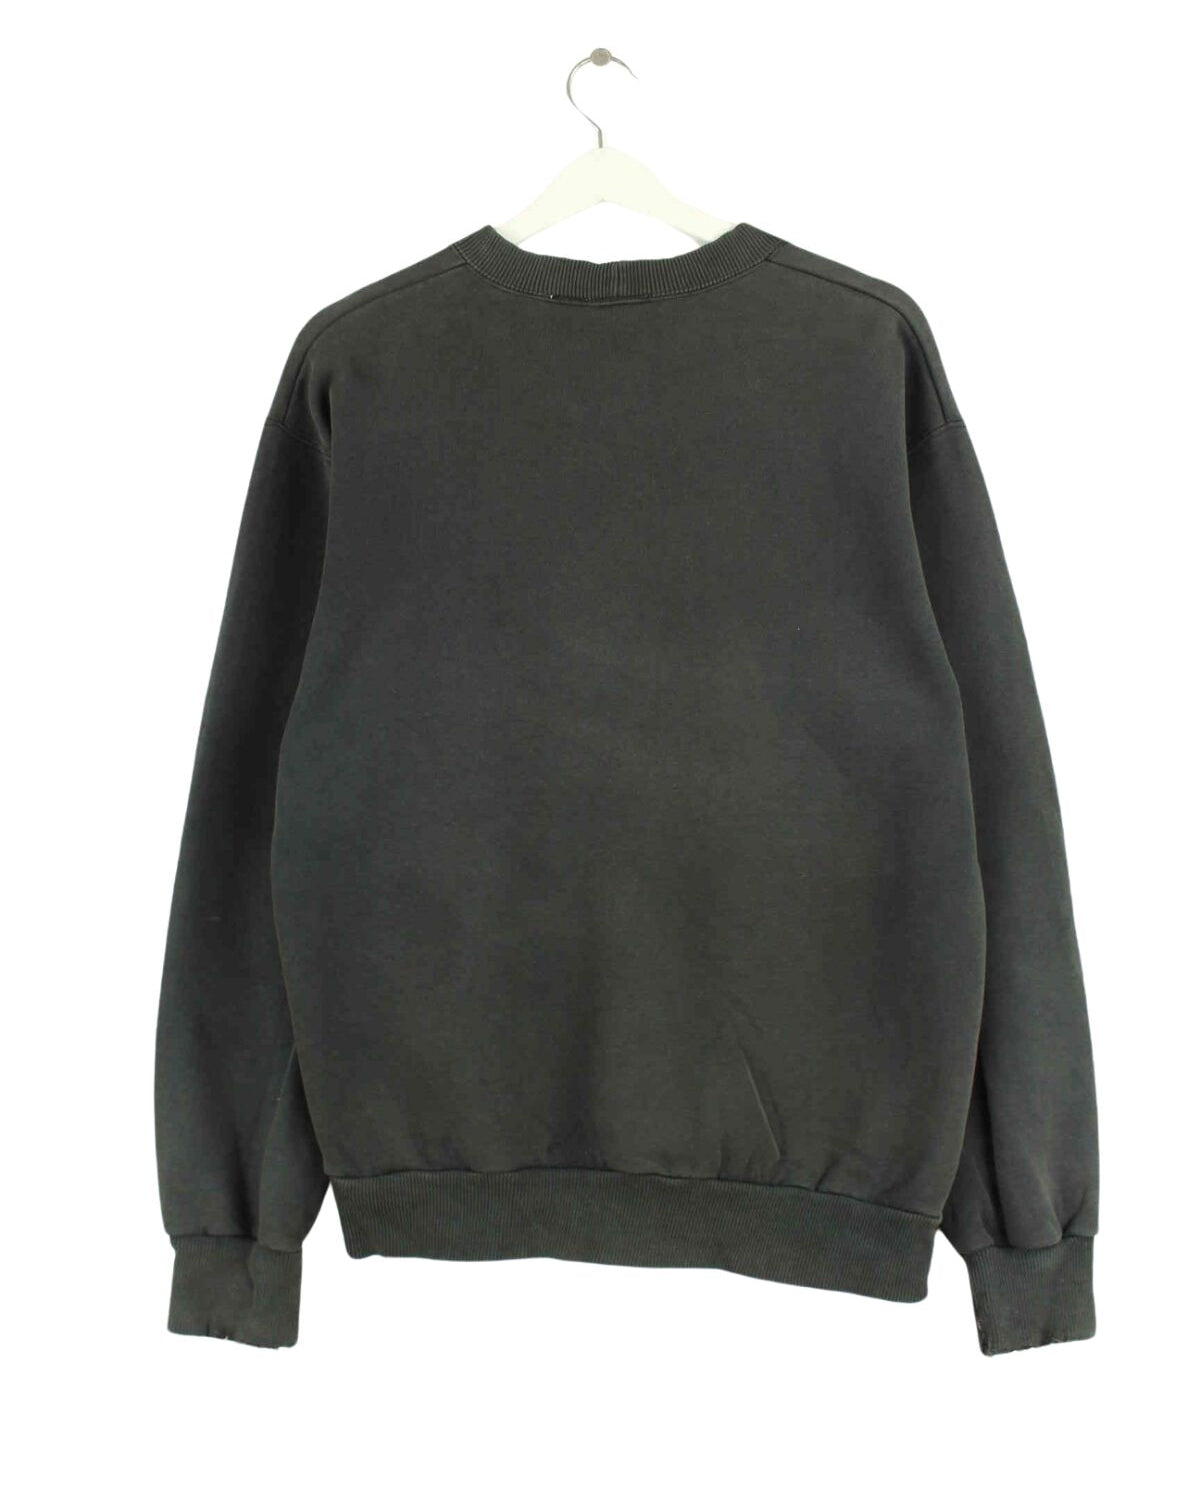 Nike 1993 Vintage Silver Tag Sweater Grau S (back image)